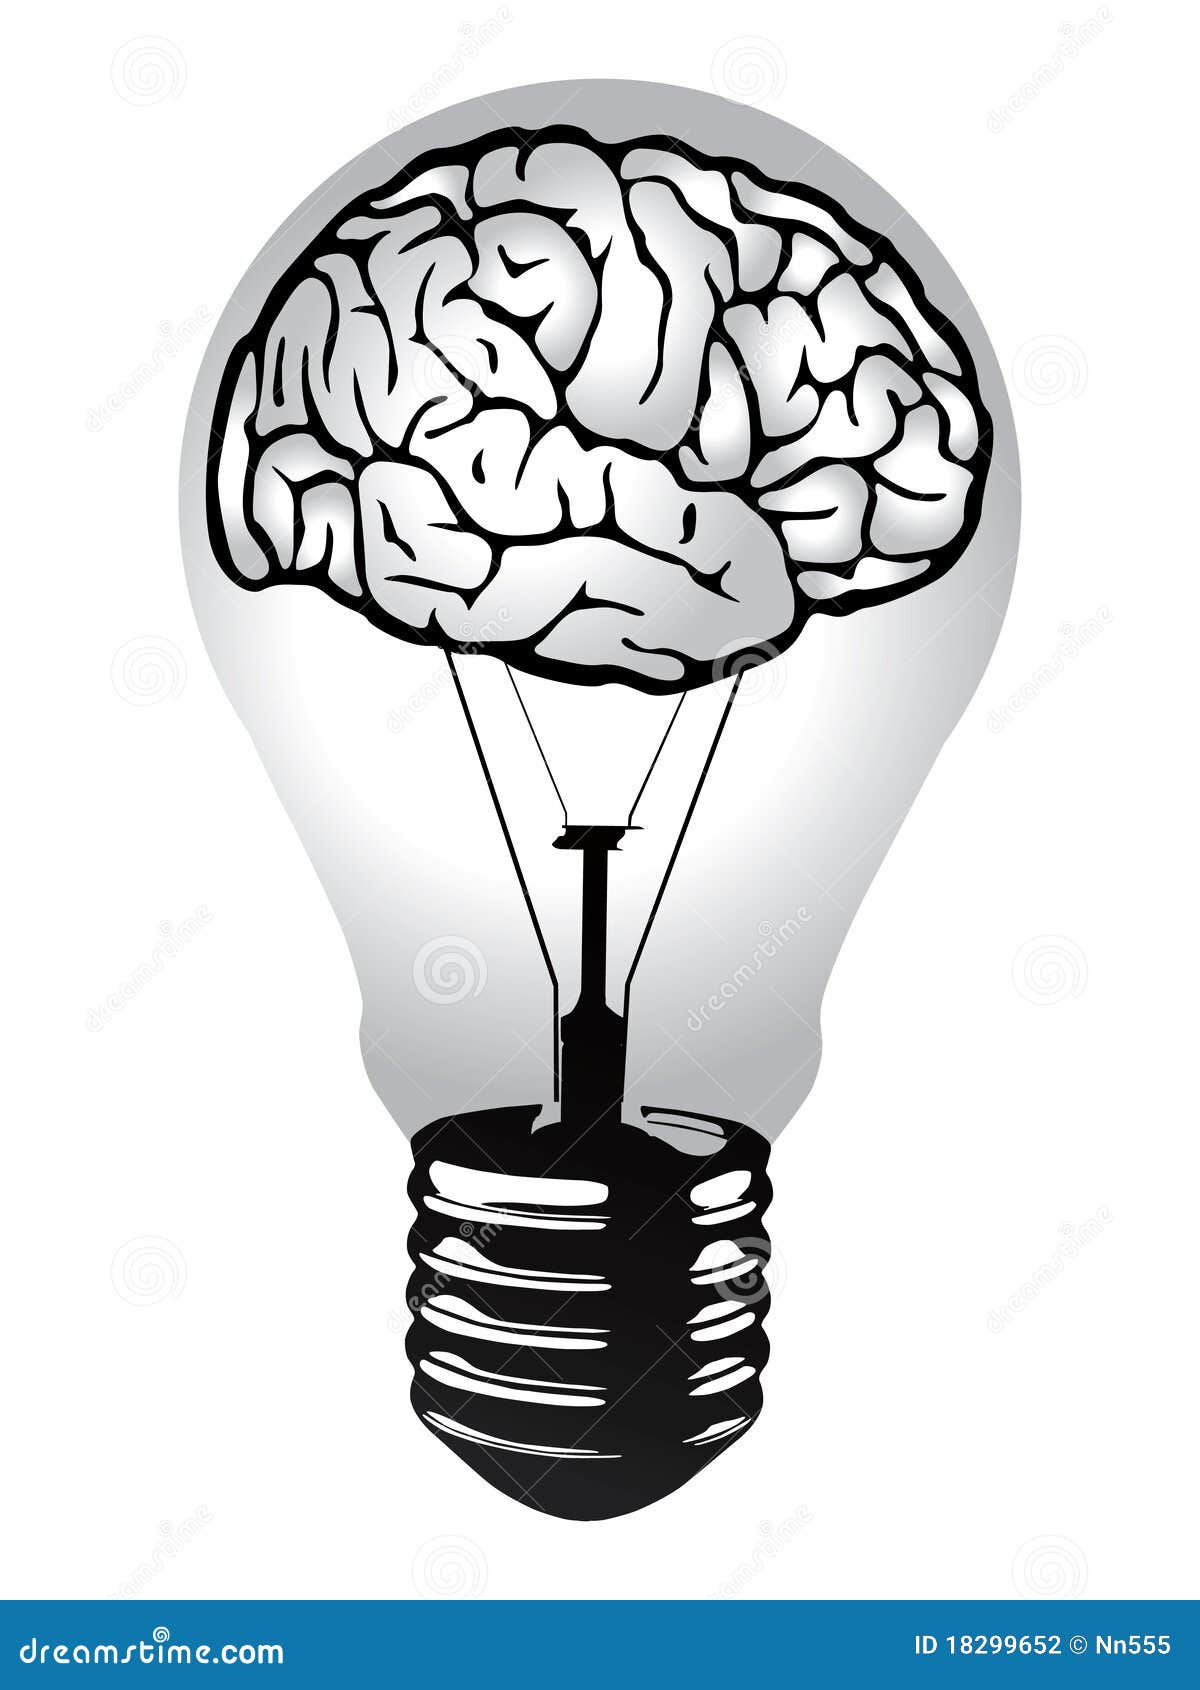 Brain Light Bulb Stock Photography - Image: 18299652